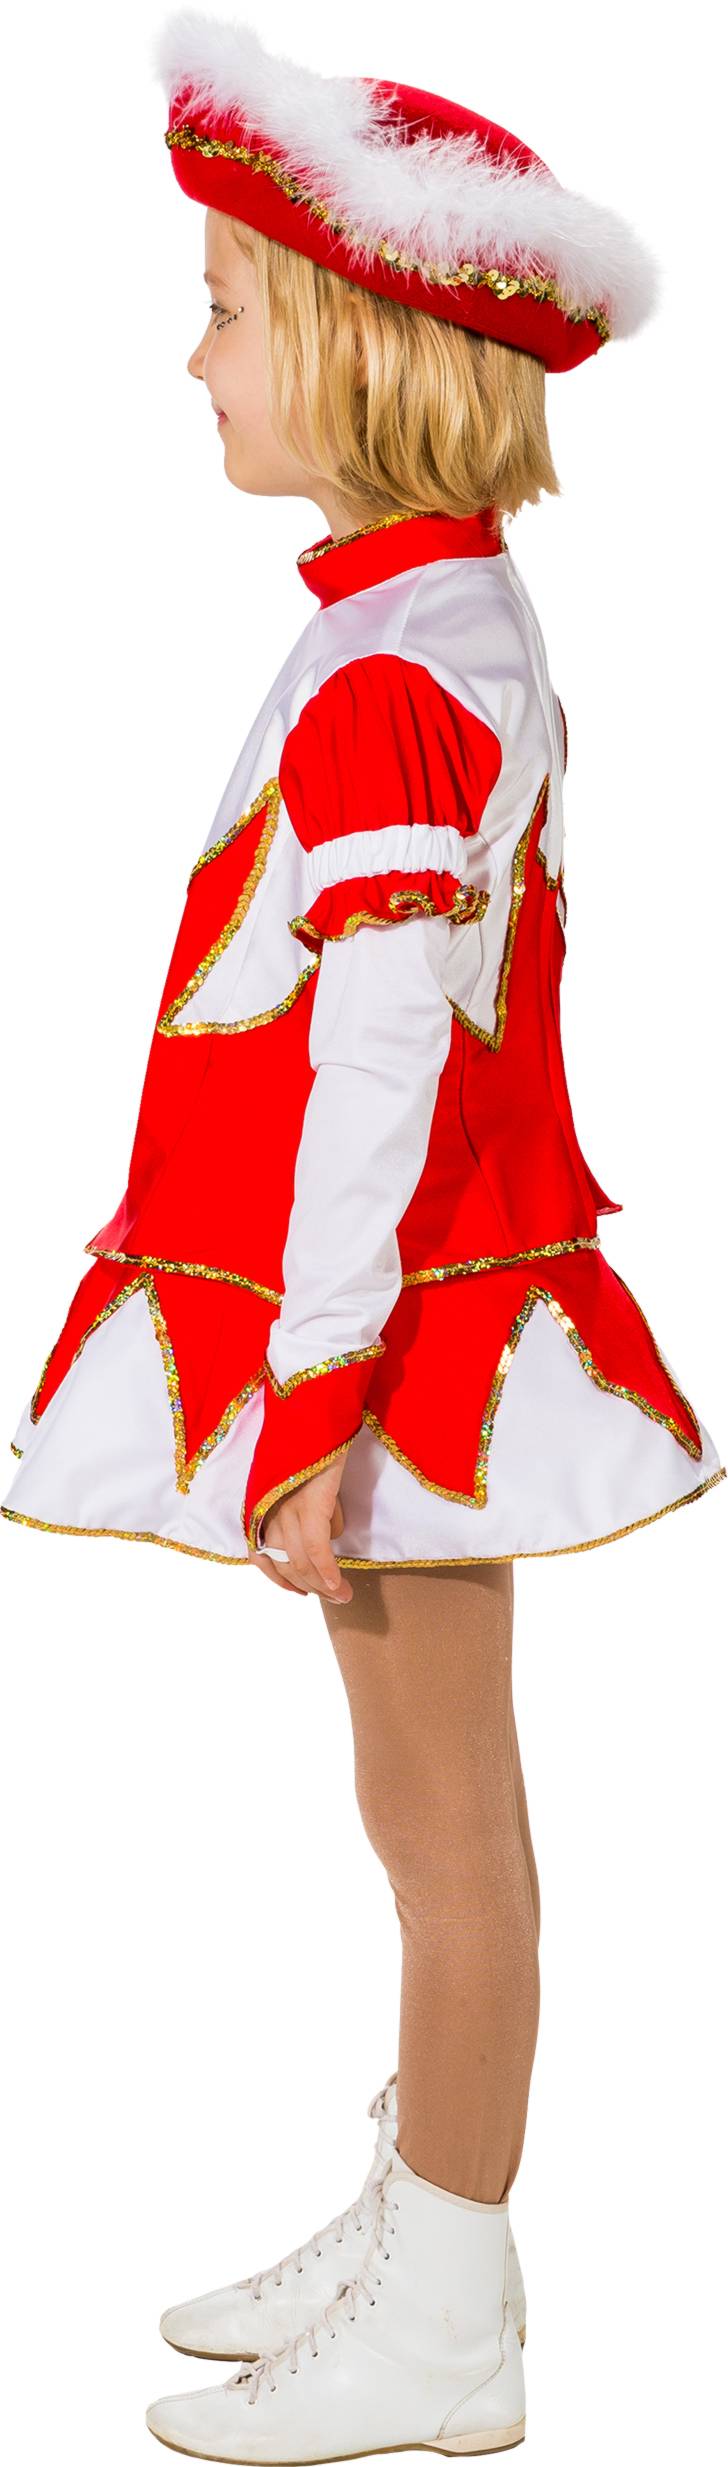 Spark costume red-white